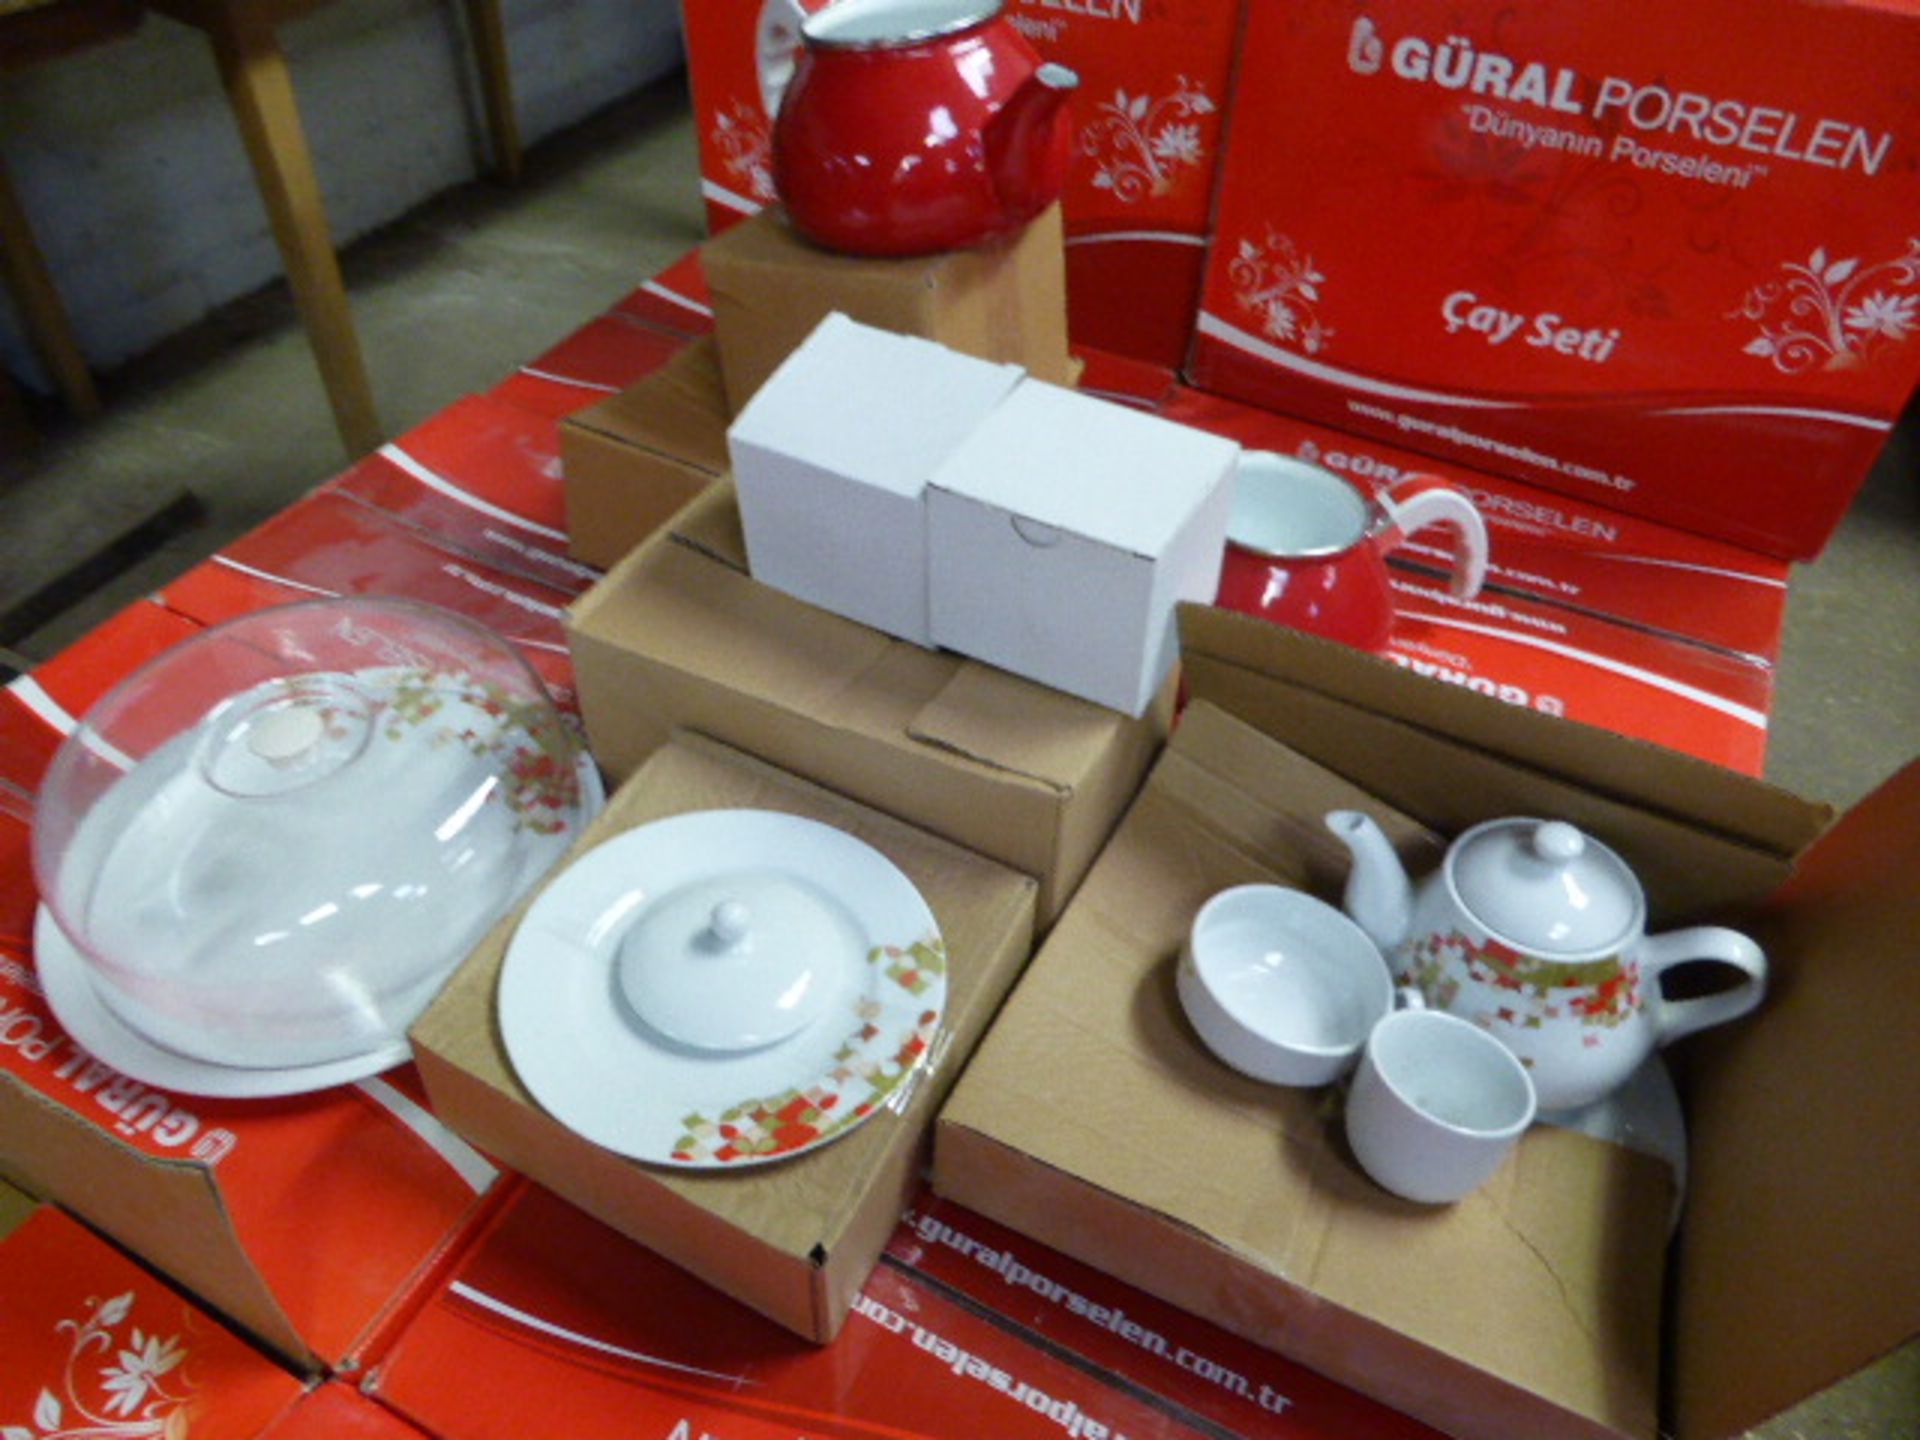 Box of Gural Porselen tea and cake serving set comprising cake display, tea pot, tea cups, cake